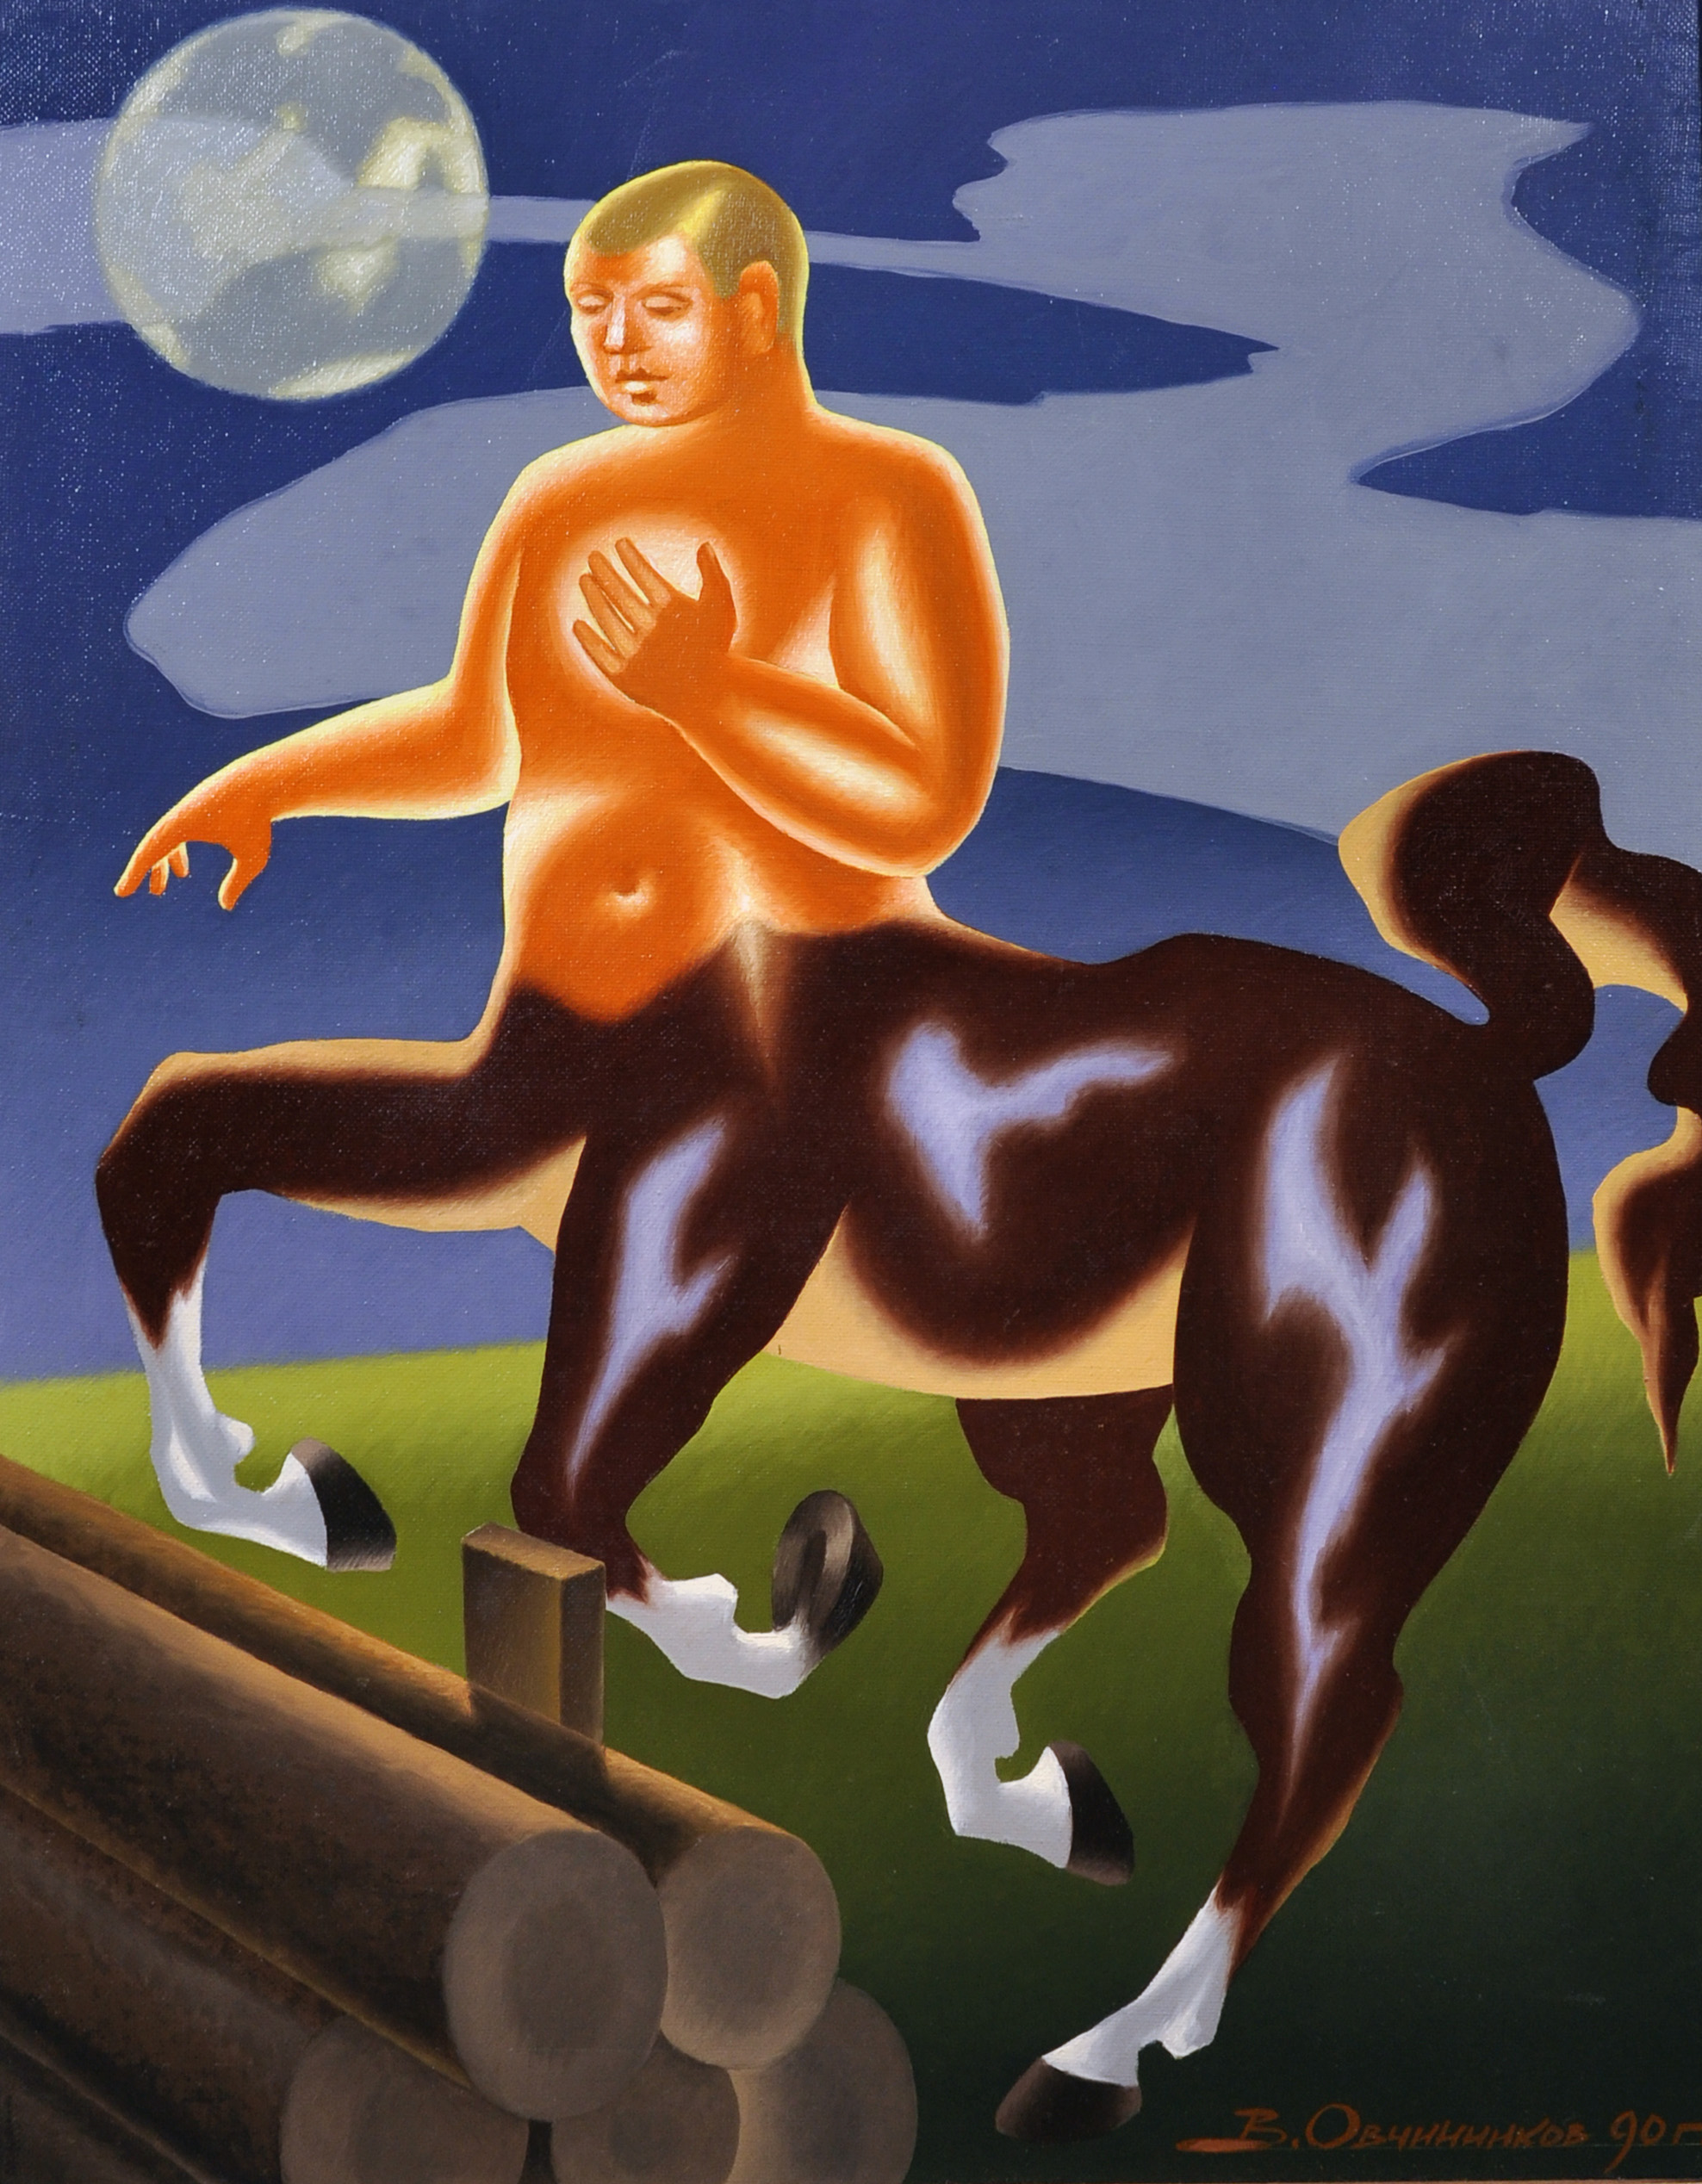 Vladimir Ovchinnikov (1941-2015) Russian. “Centaur”, Study of a Surreal Centaur, Oil on Canvas,